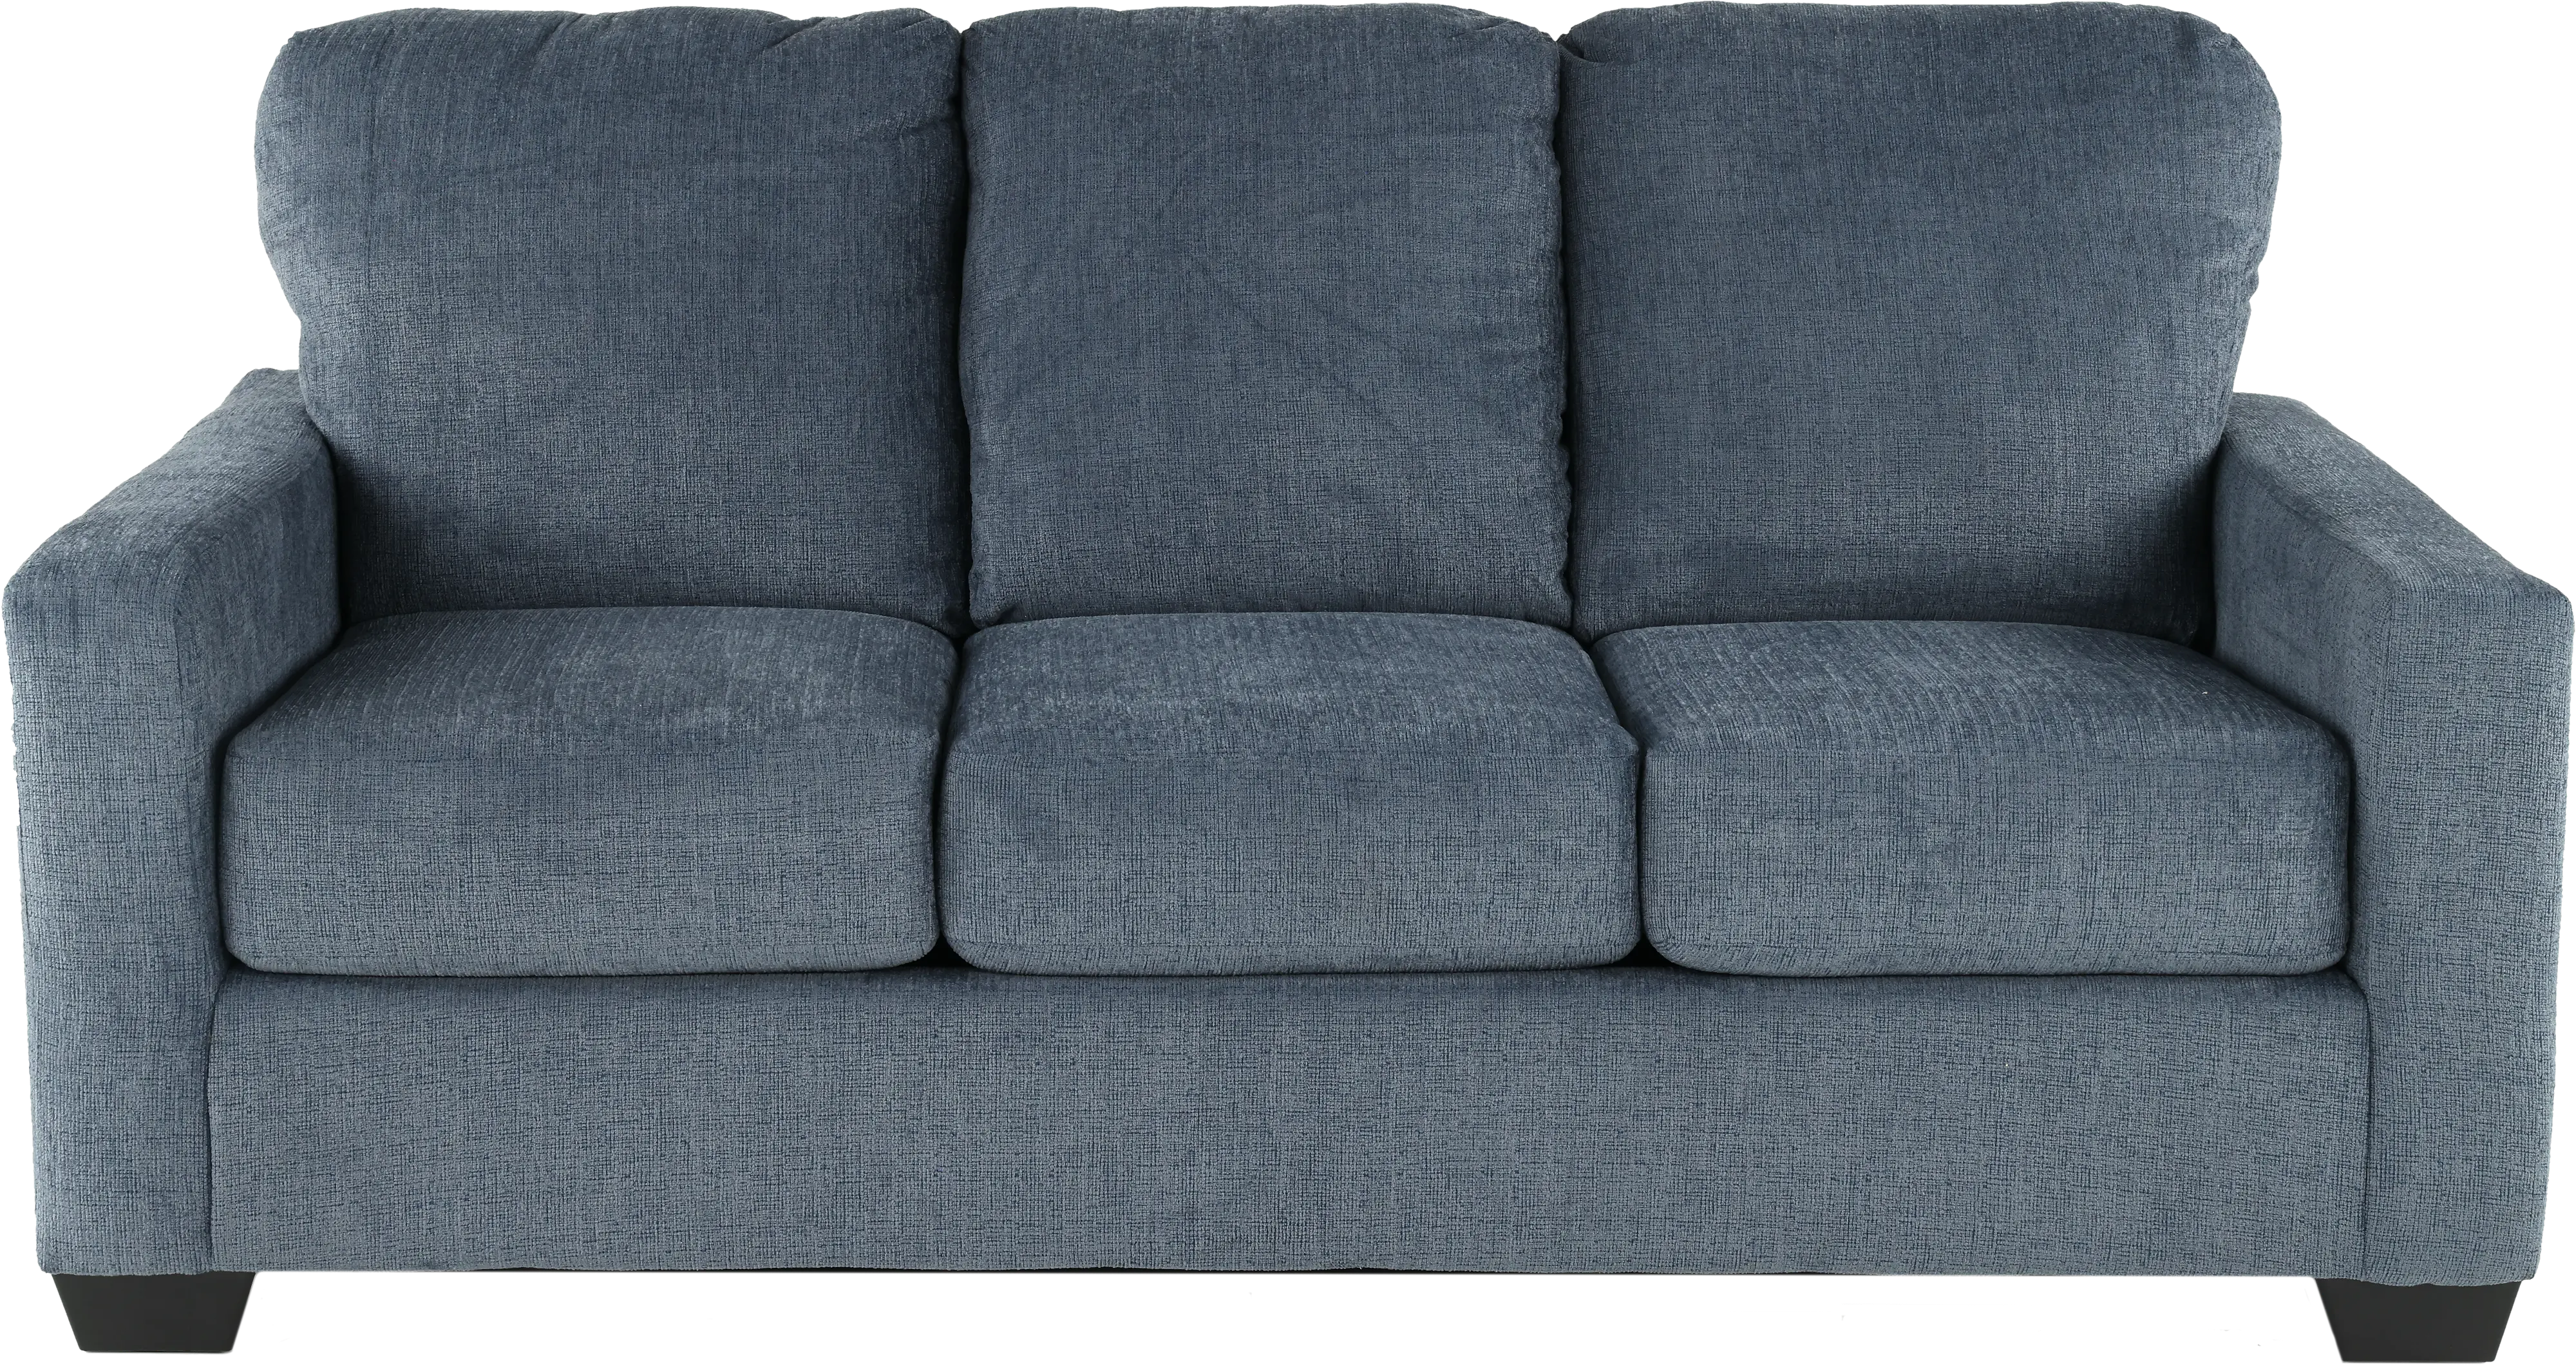 Rannis Navy Blue Full Sleeper Sofa